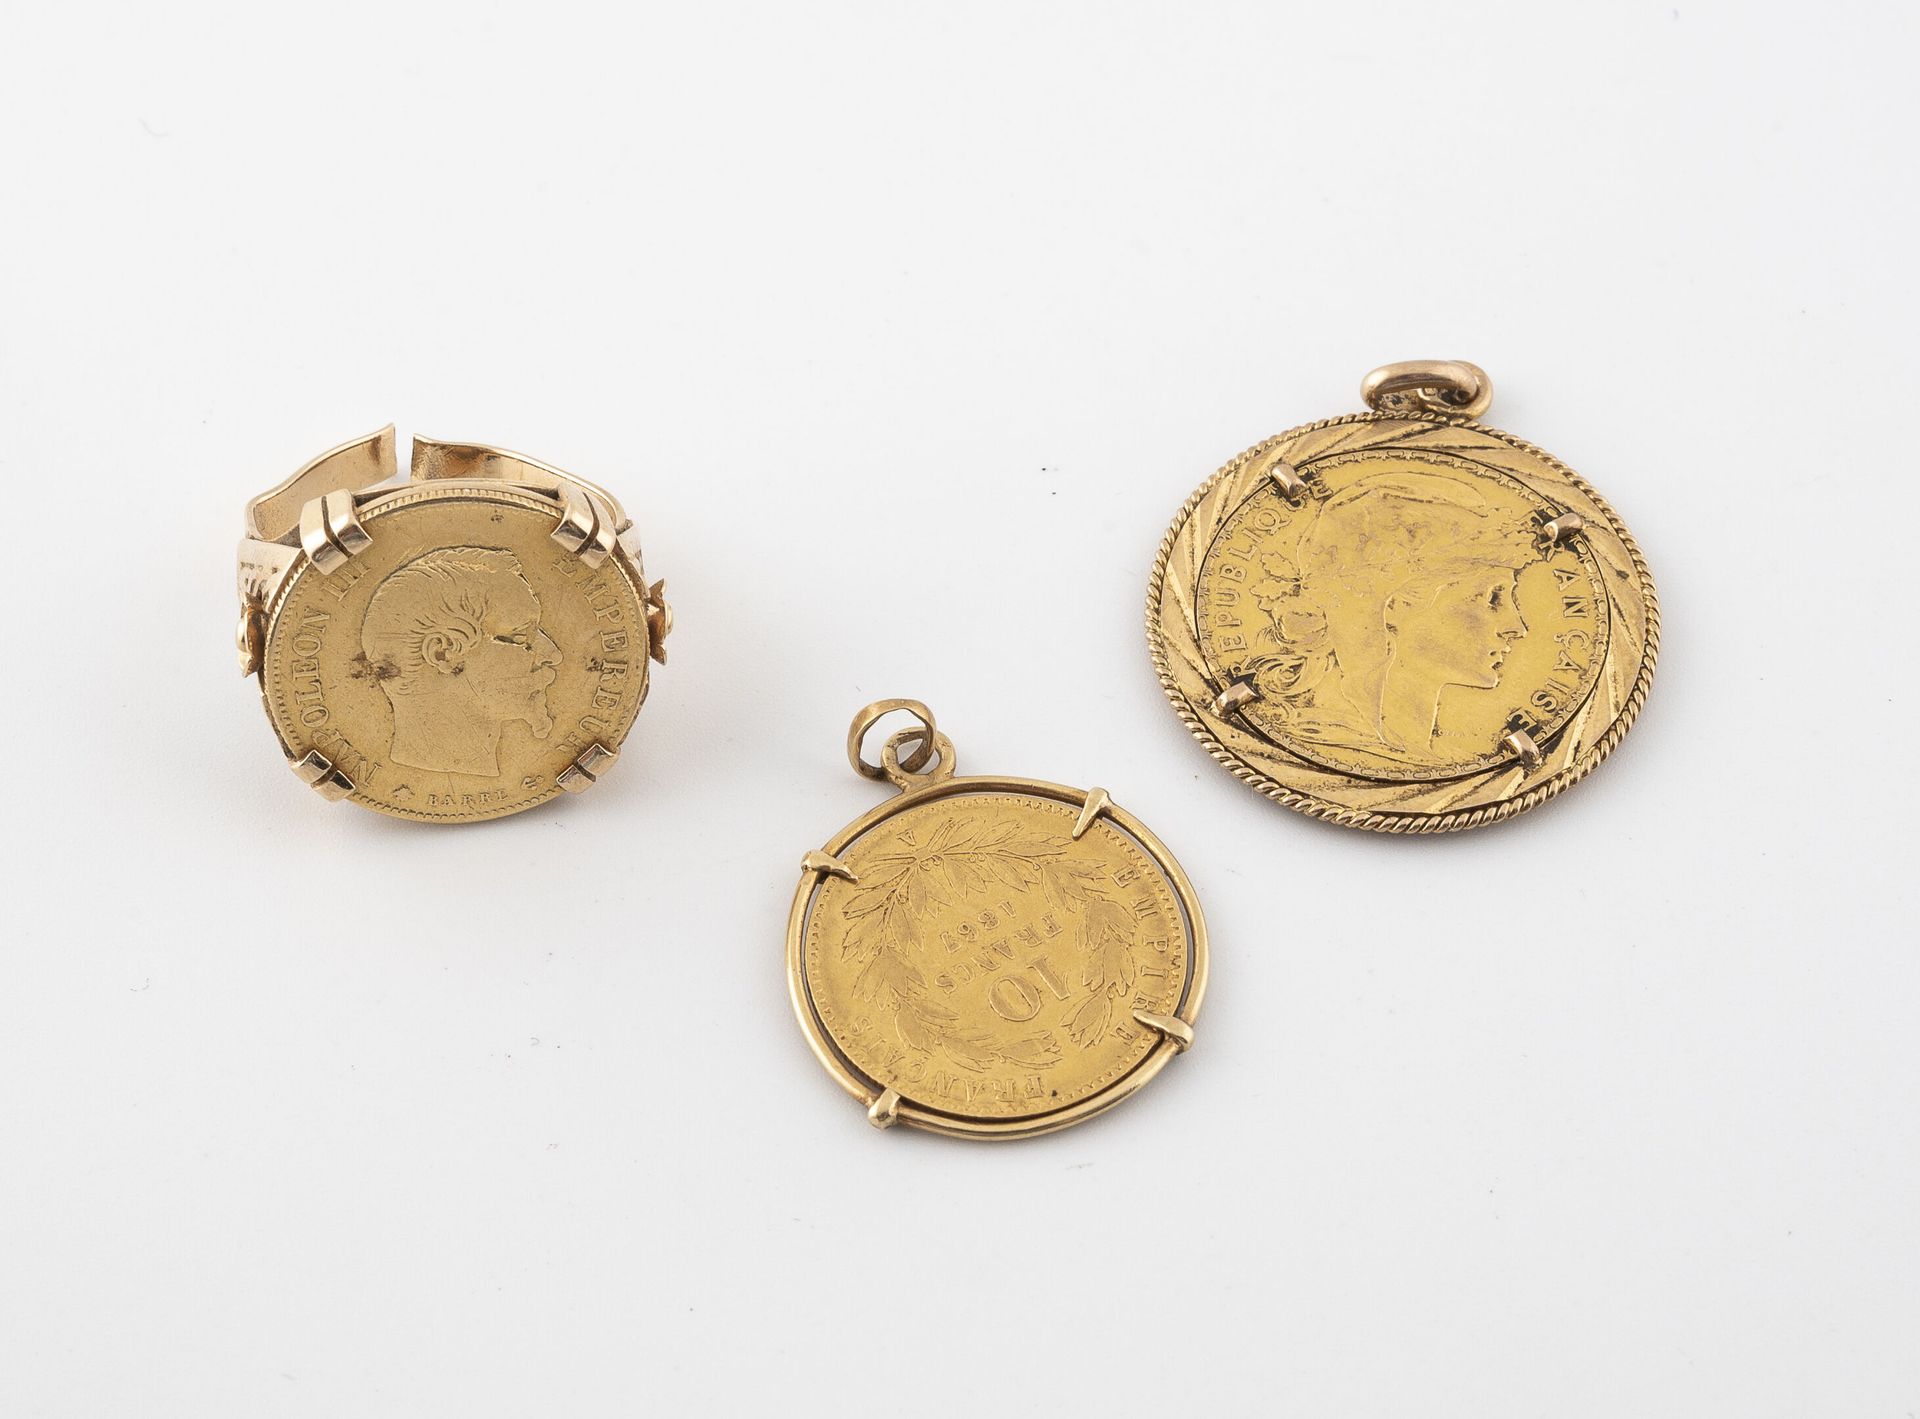 France - 10法郎金币，拿破仑三世，1867年巴黎，安装在吊坠上。

重量：3.9克。

- 20法郎金币，1913年。

重量：9克。 

- 10法&hellip;